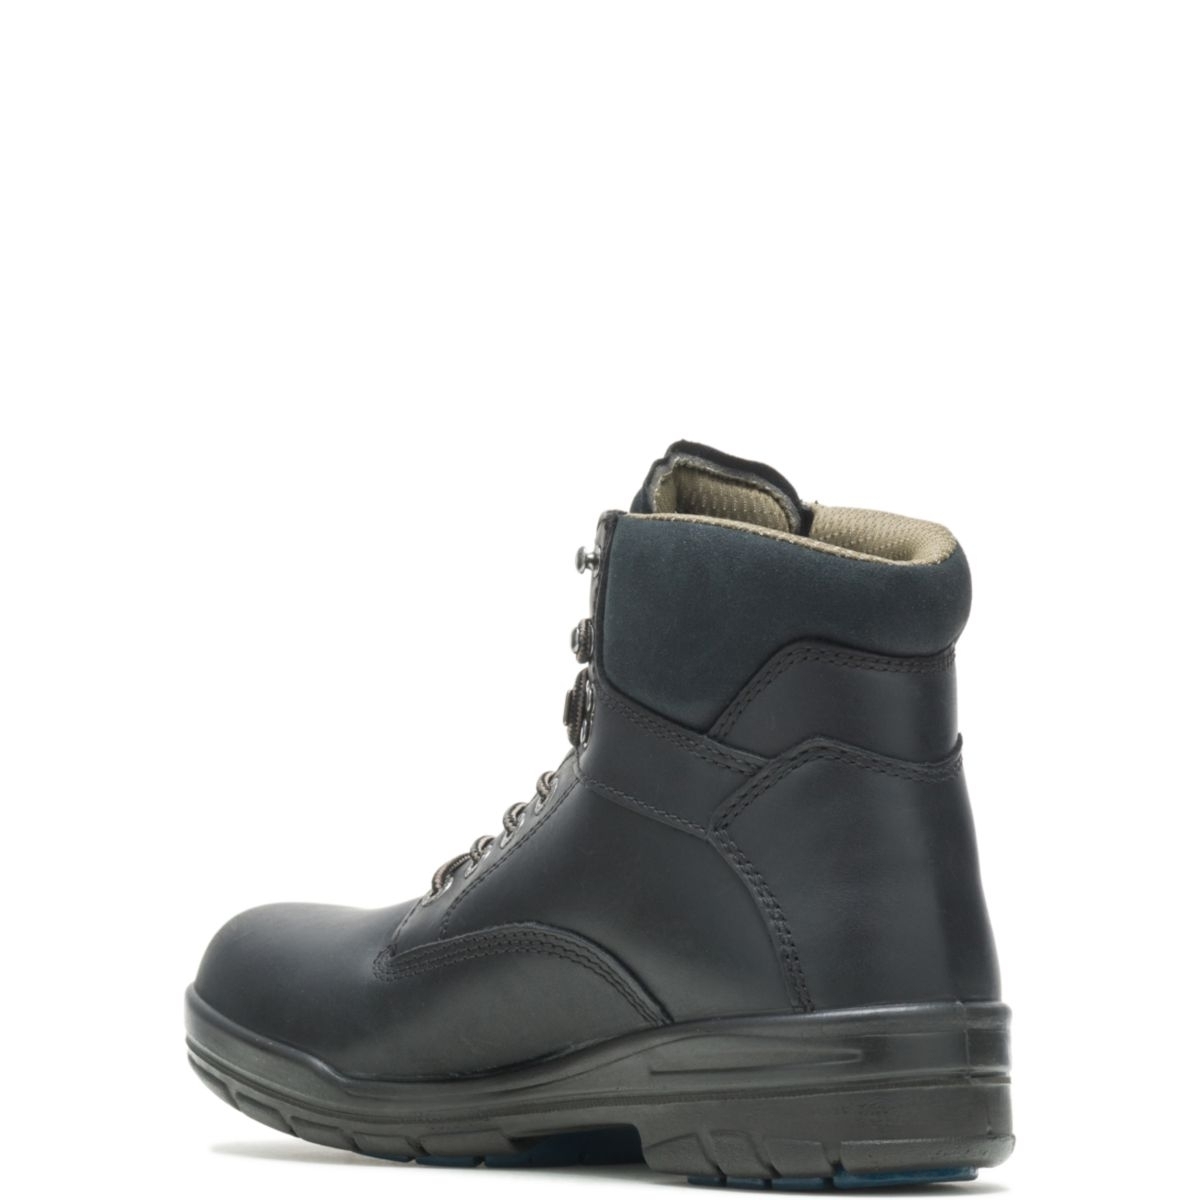 WOLVERINE Men's 6 DuraShocksÂ® Slip Resistant Direct-Attached Lined Soft Toe Work Boot Black - W03123 14 WIDE BLACK - BLACK, 7 Wide